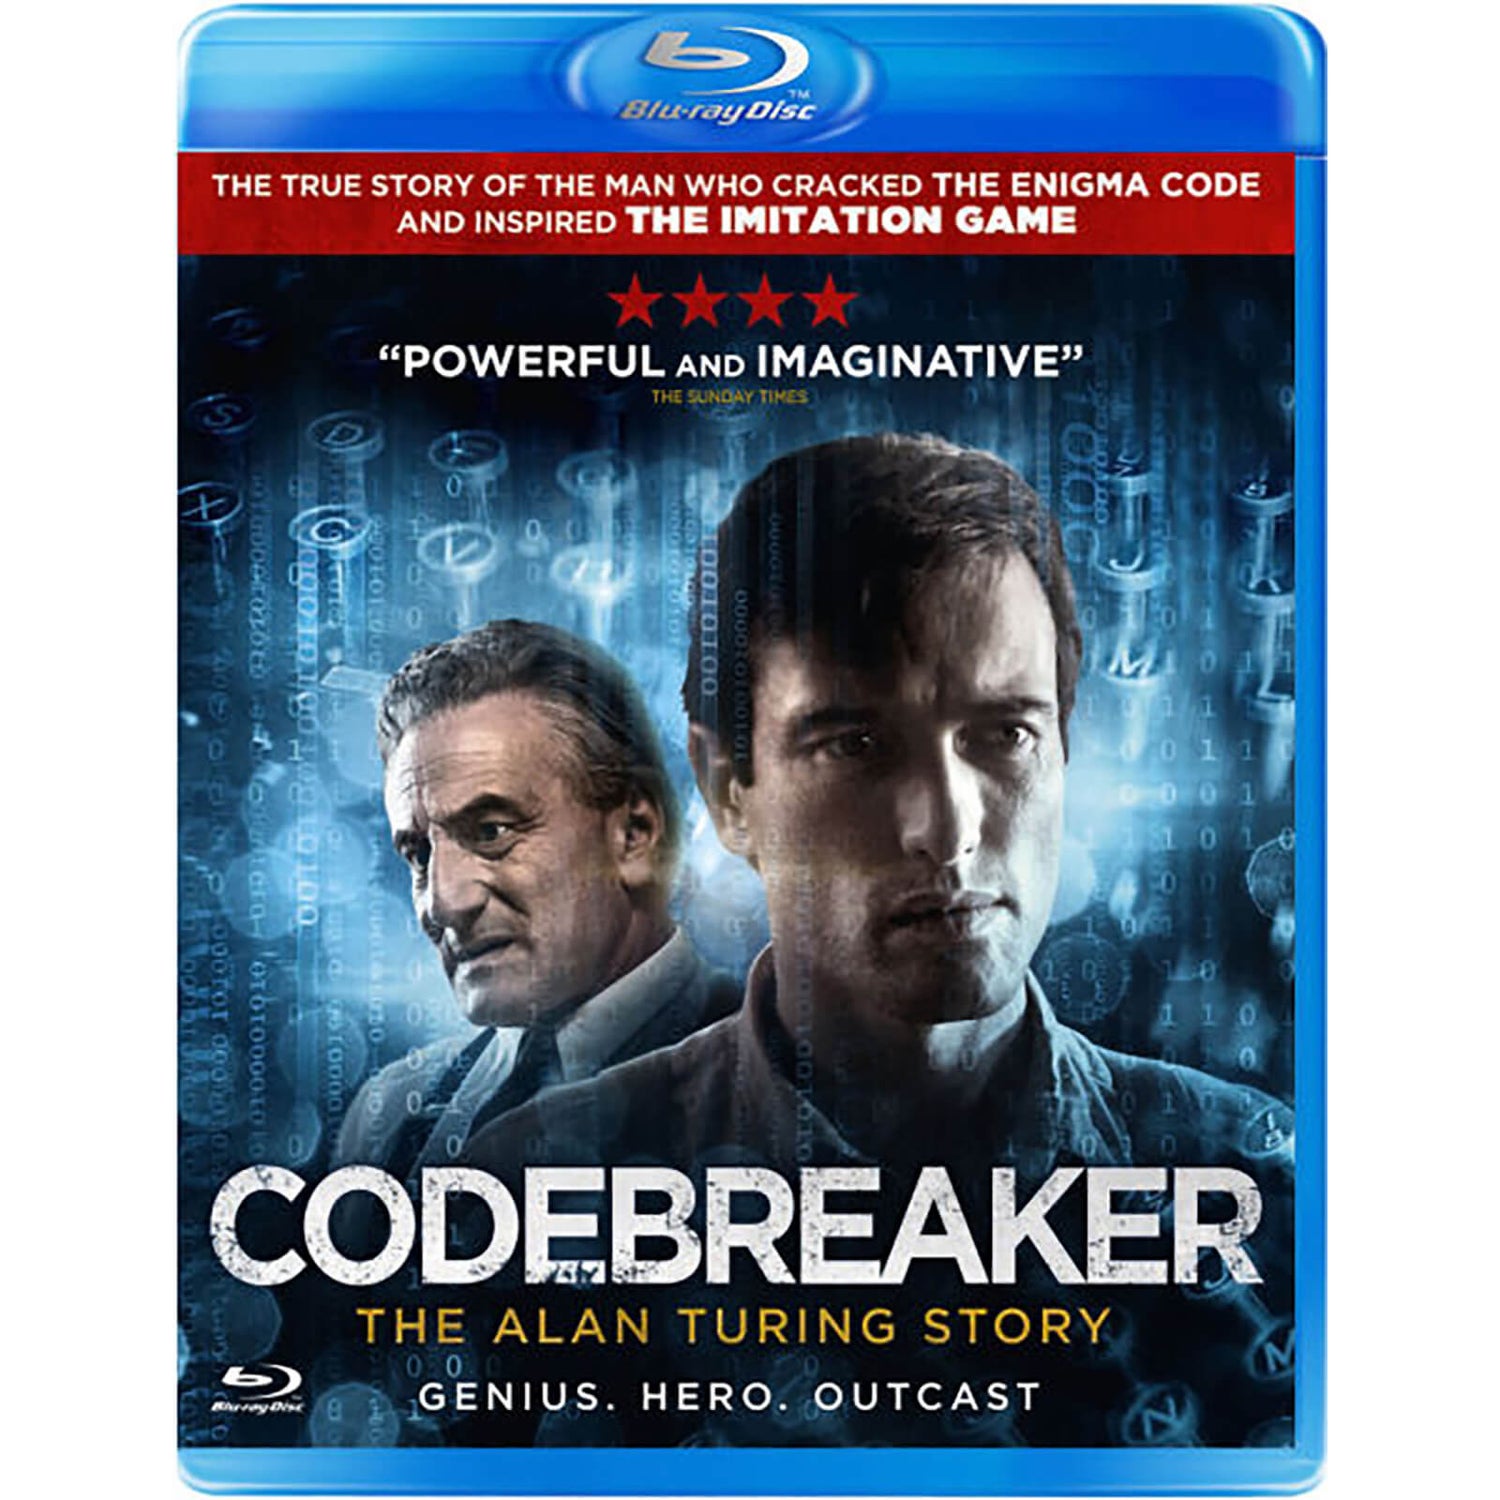 Codebreaker: The Alan Turing Story